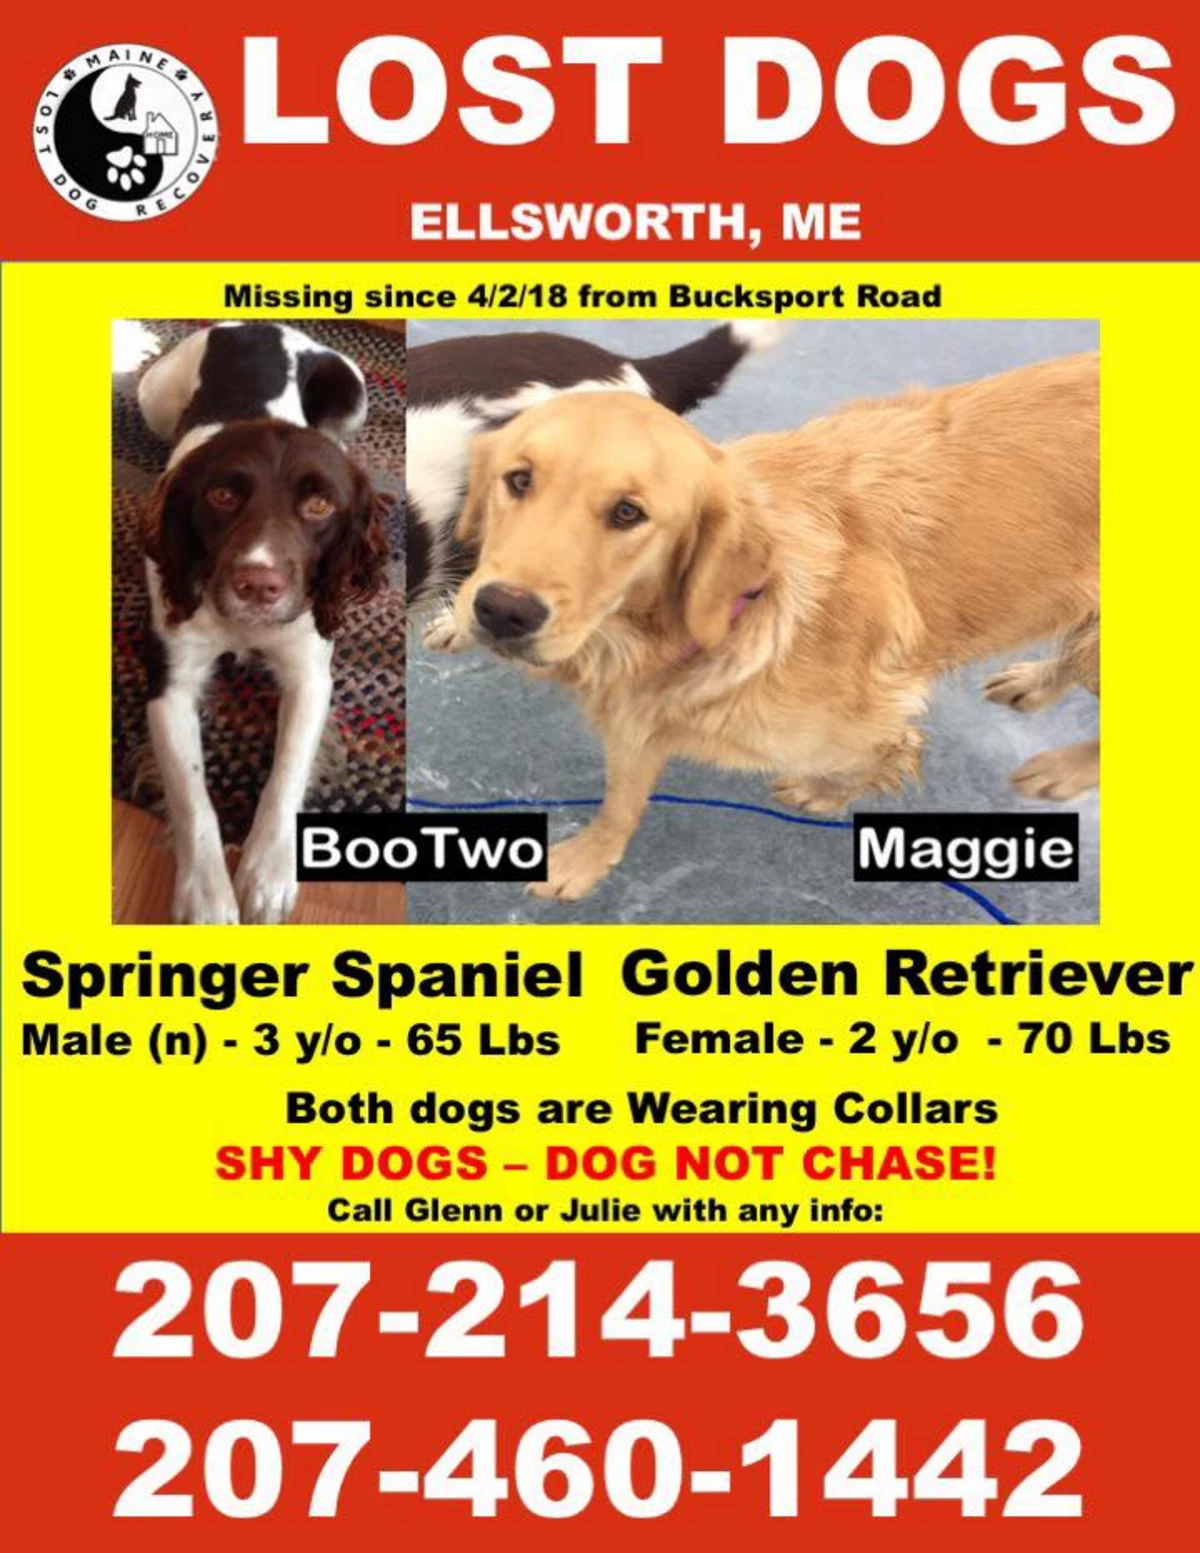 Lost Dogs in Ellsworth Found [UPDATE]